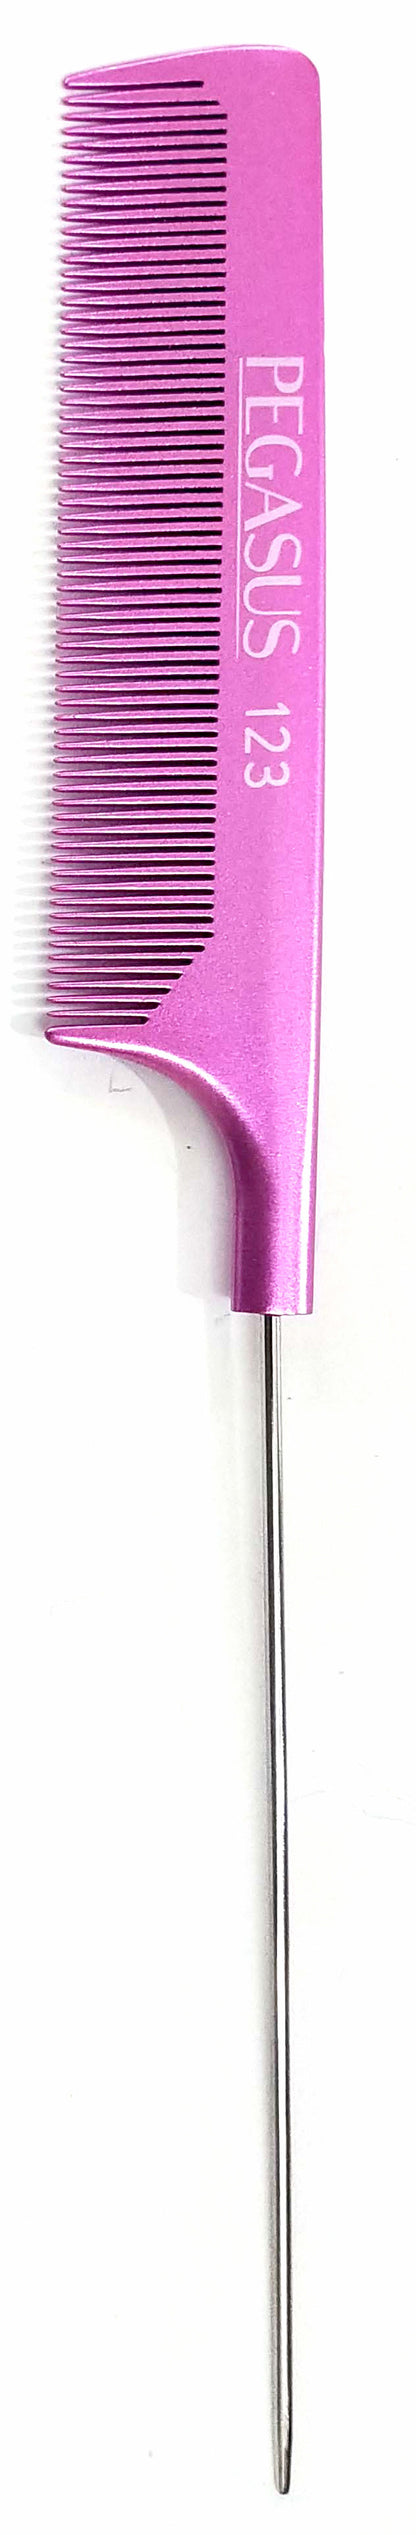 Pegasus 123/7 Extra Long Metal Tail Comb - Metallic Pink